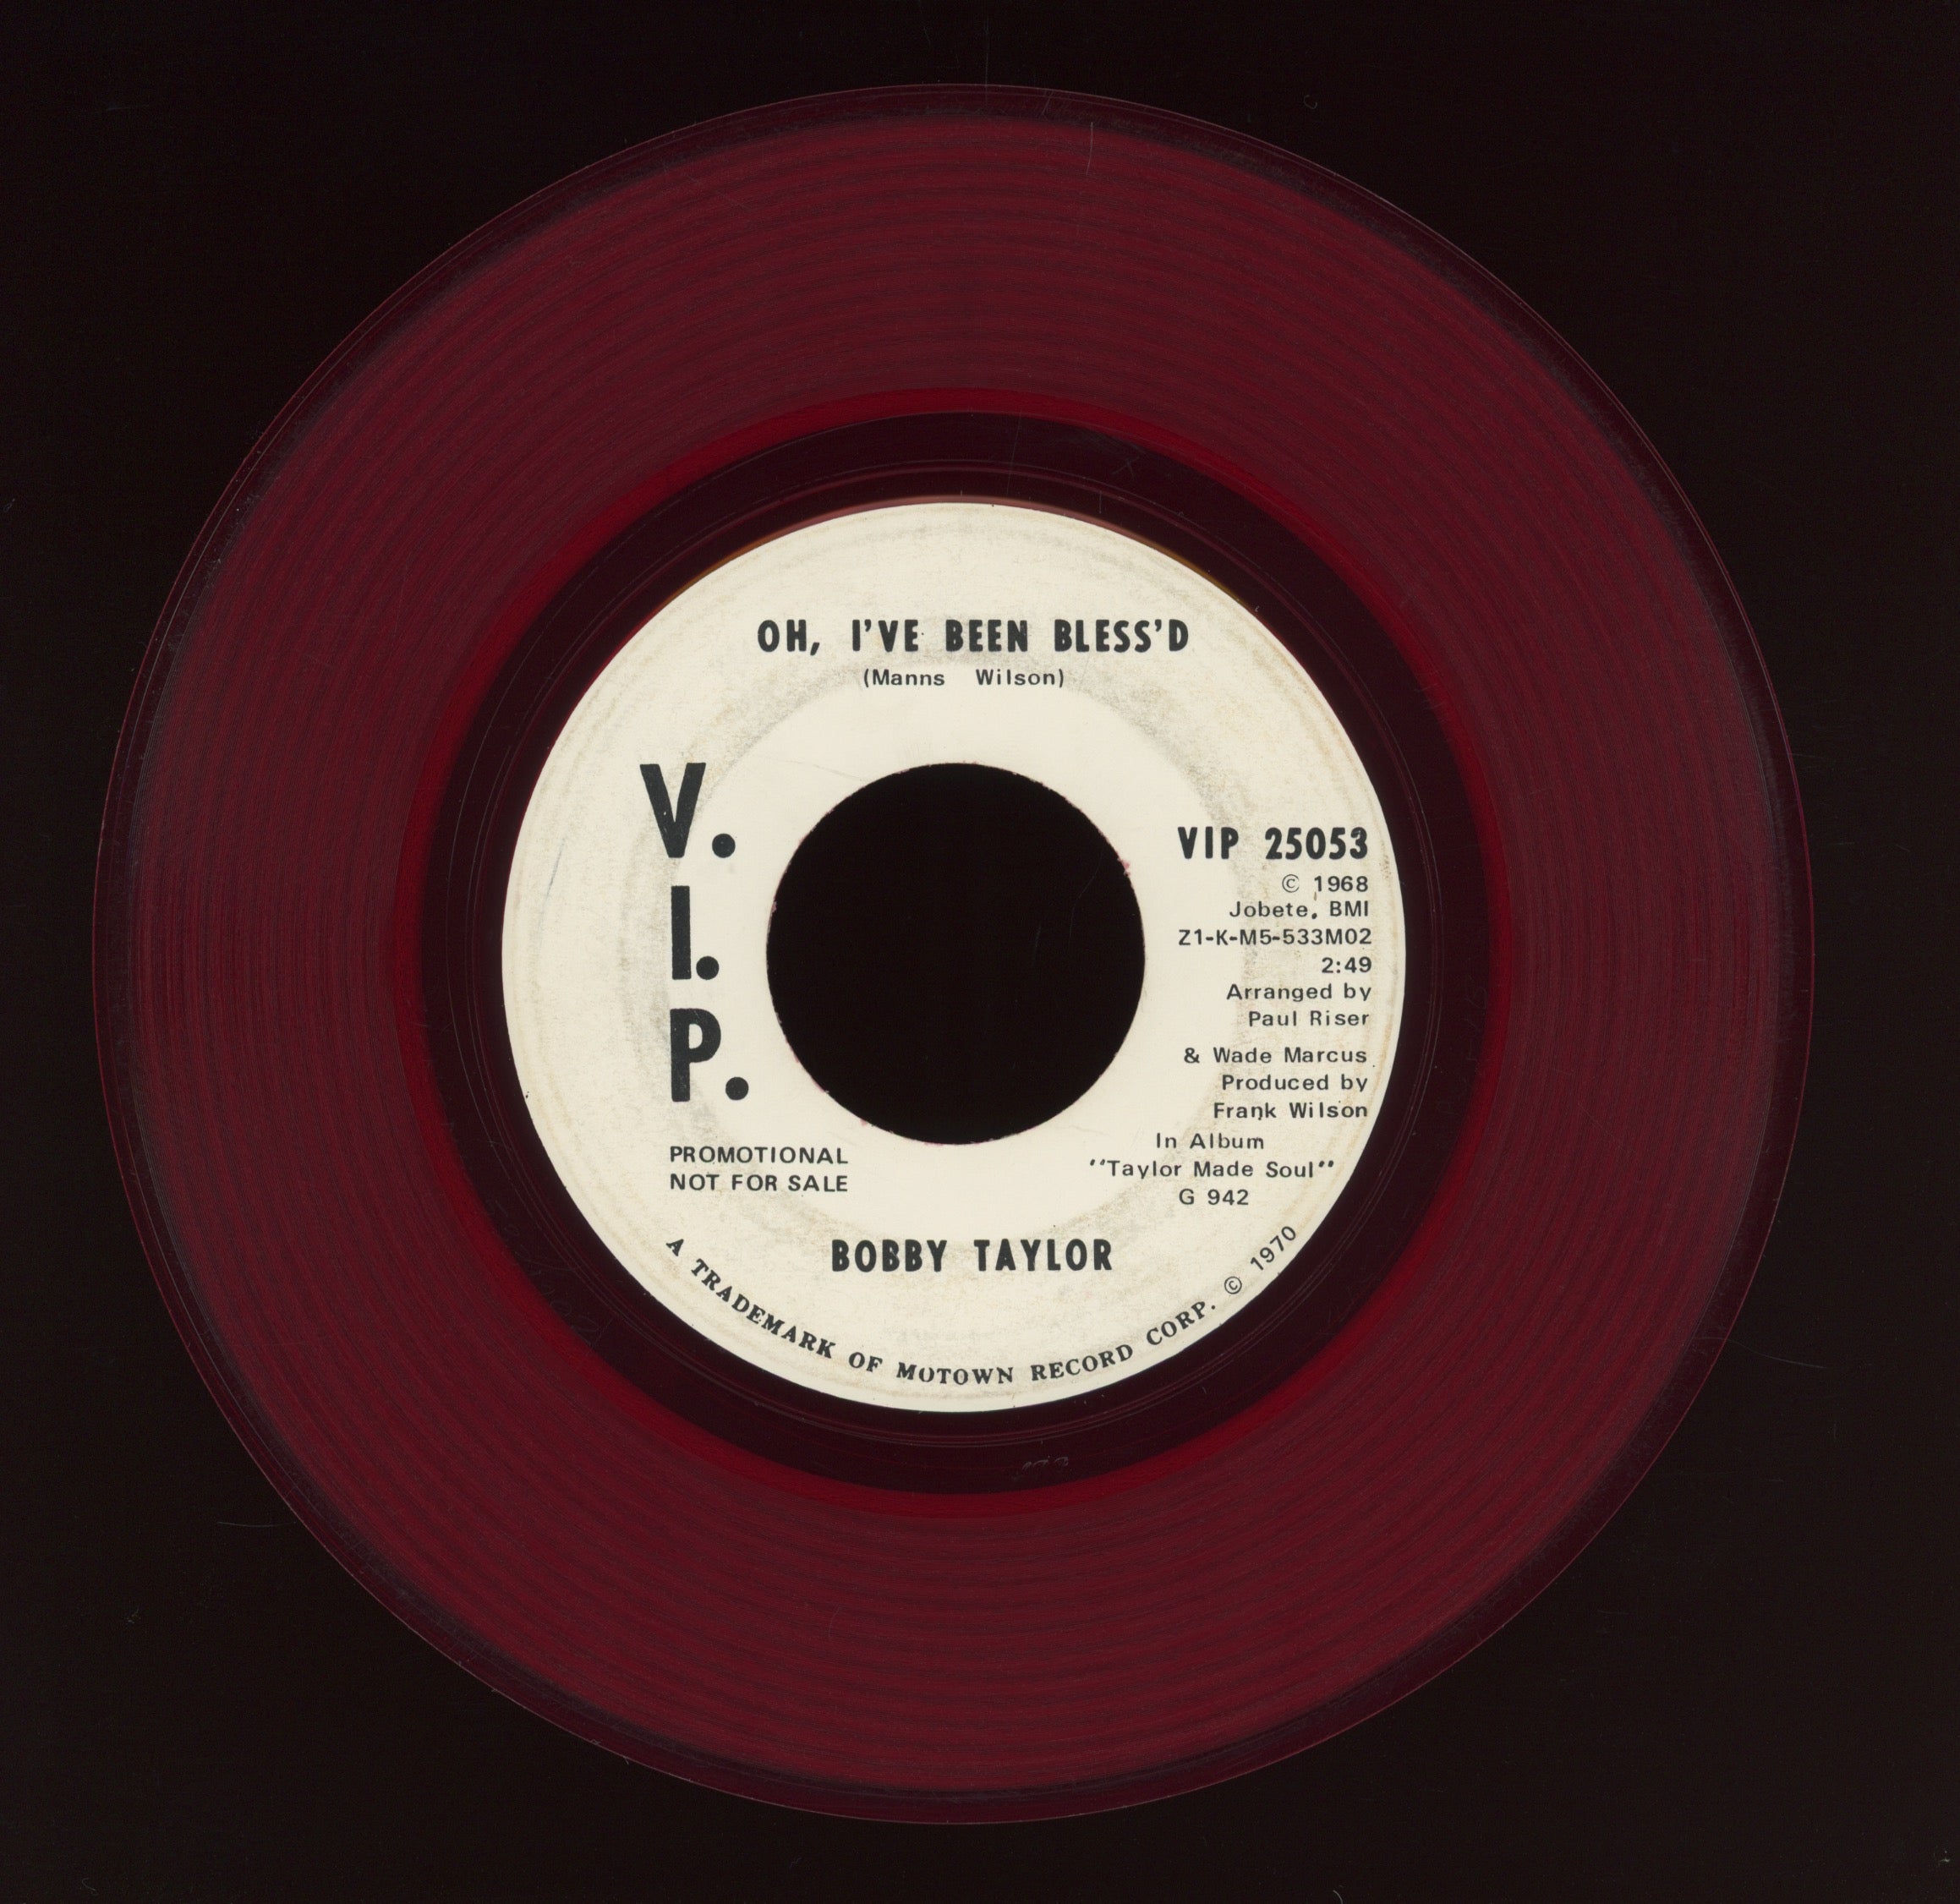 Bobby Taylor - Oh, I've Been Bless'd on V.I.P. Promo Red Vinyl Northern Soul 45